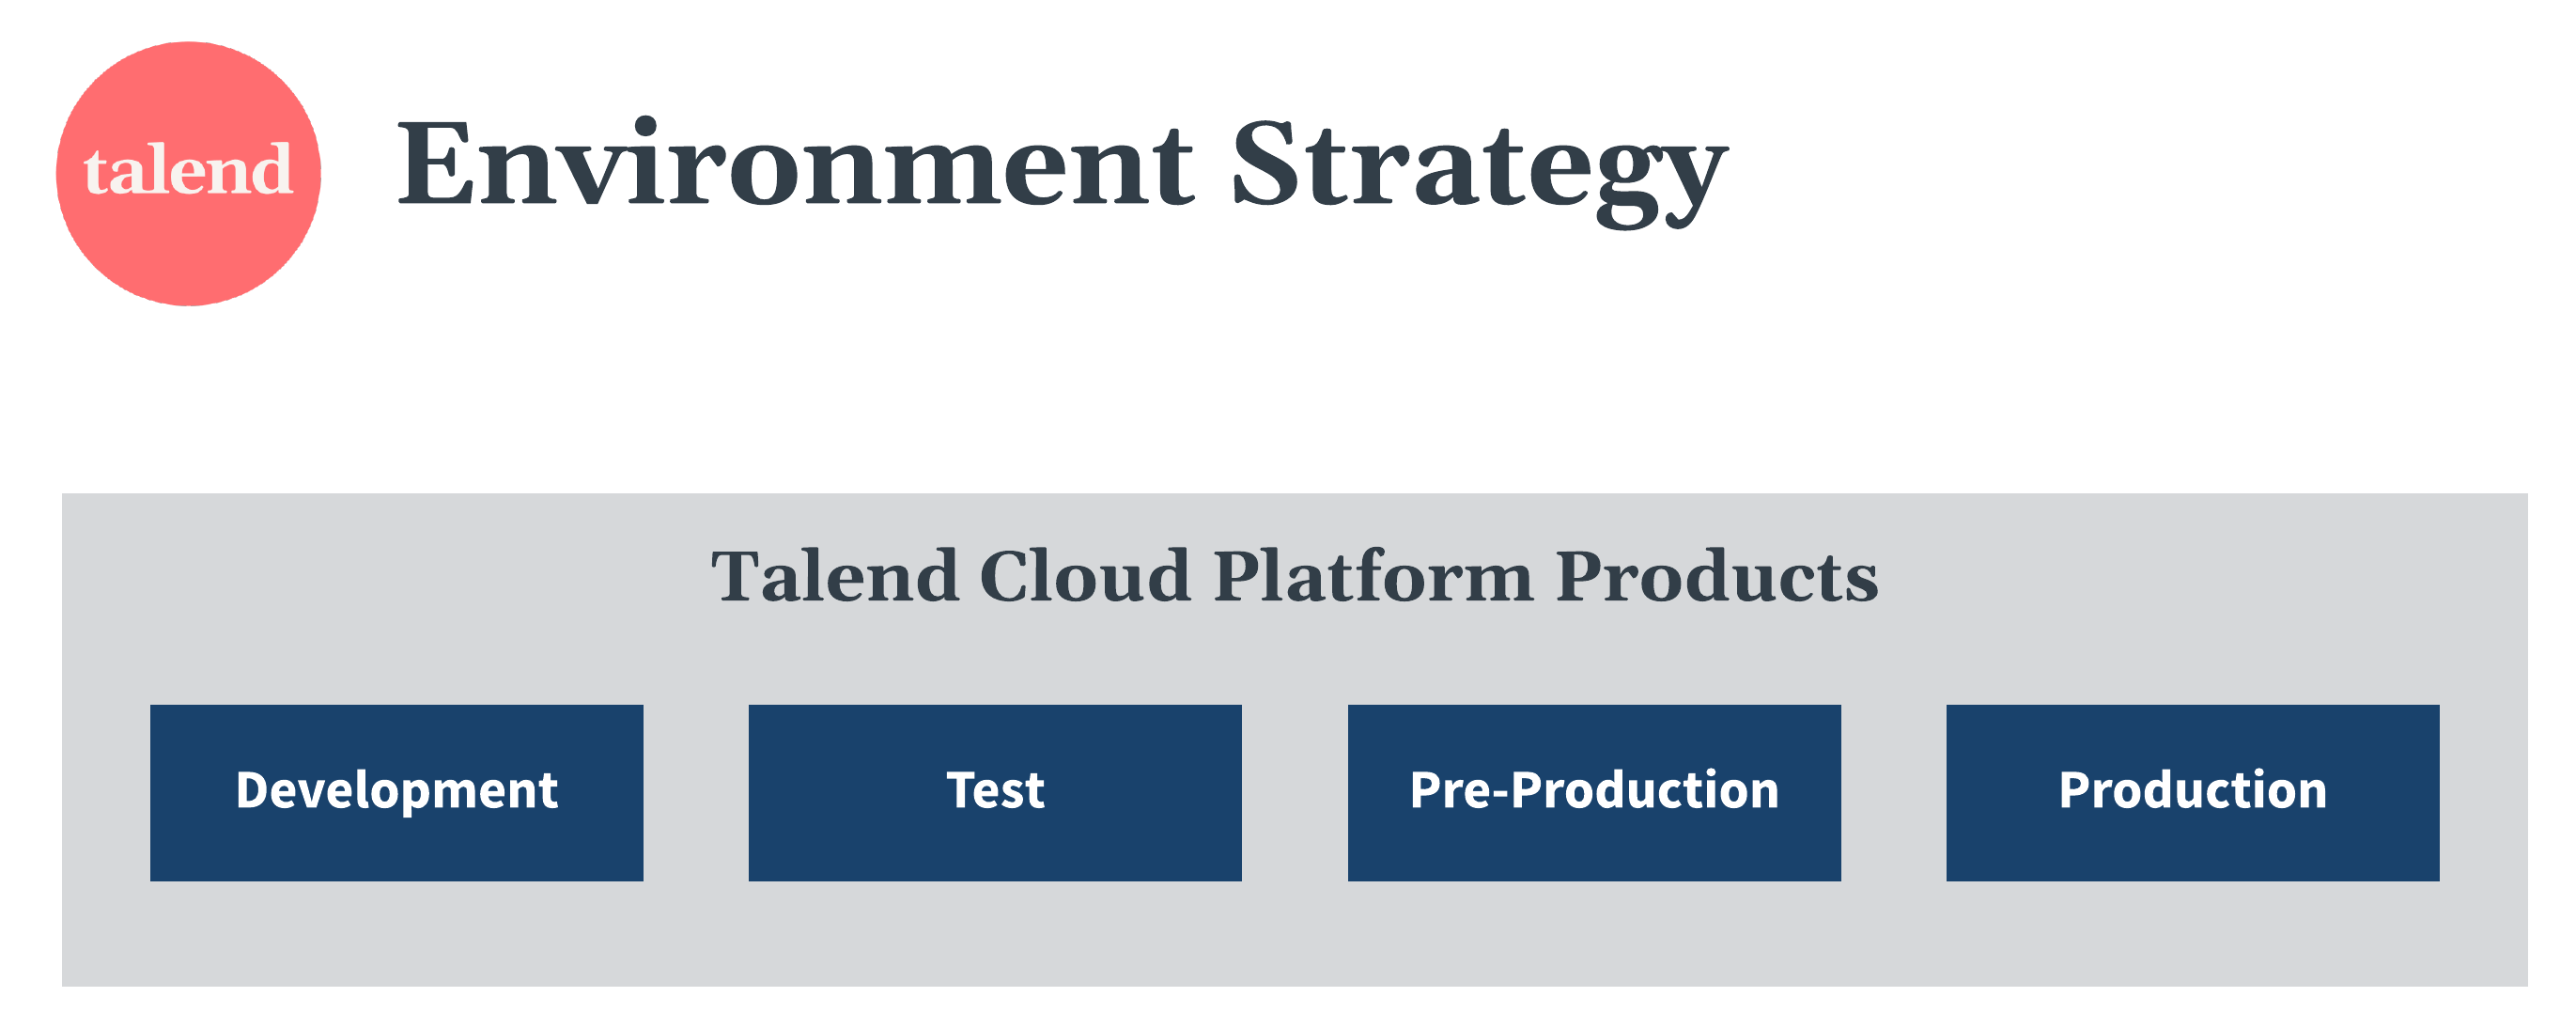 Talend Cloud Diagramm zu Plattformprodukte-Umgebungsstrategie.